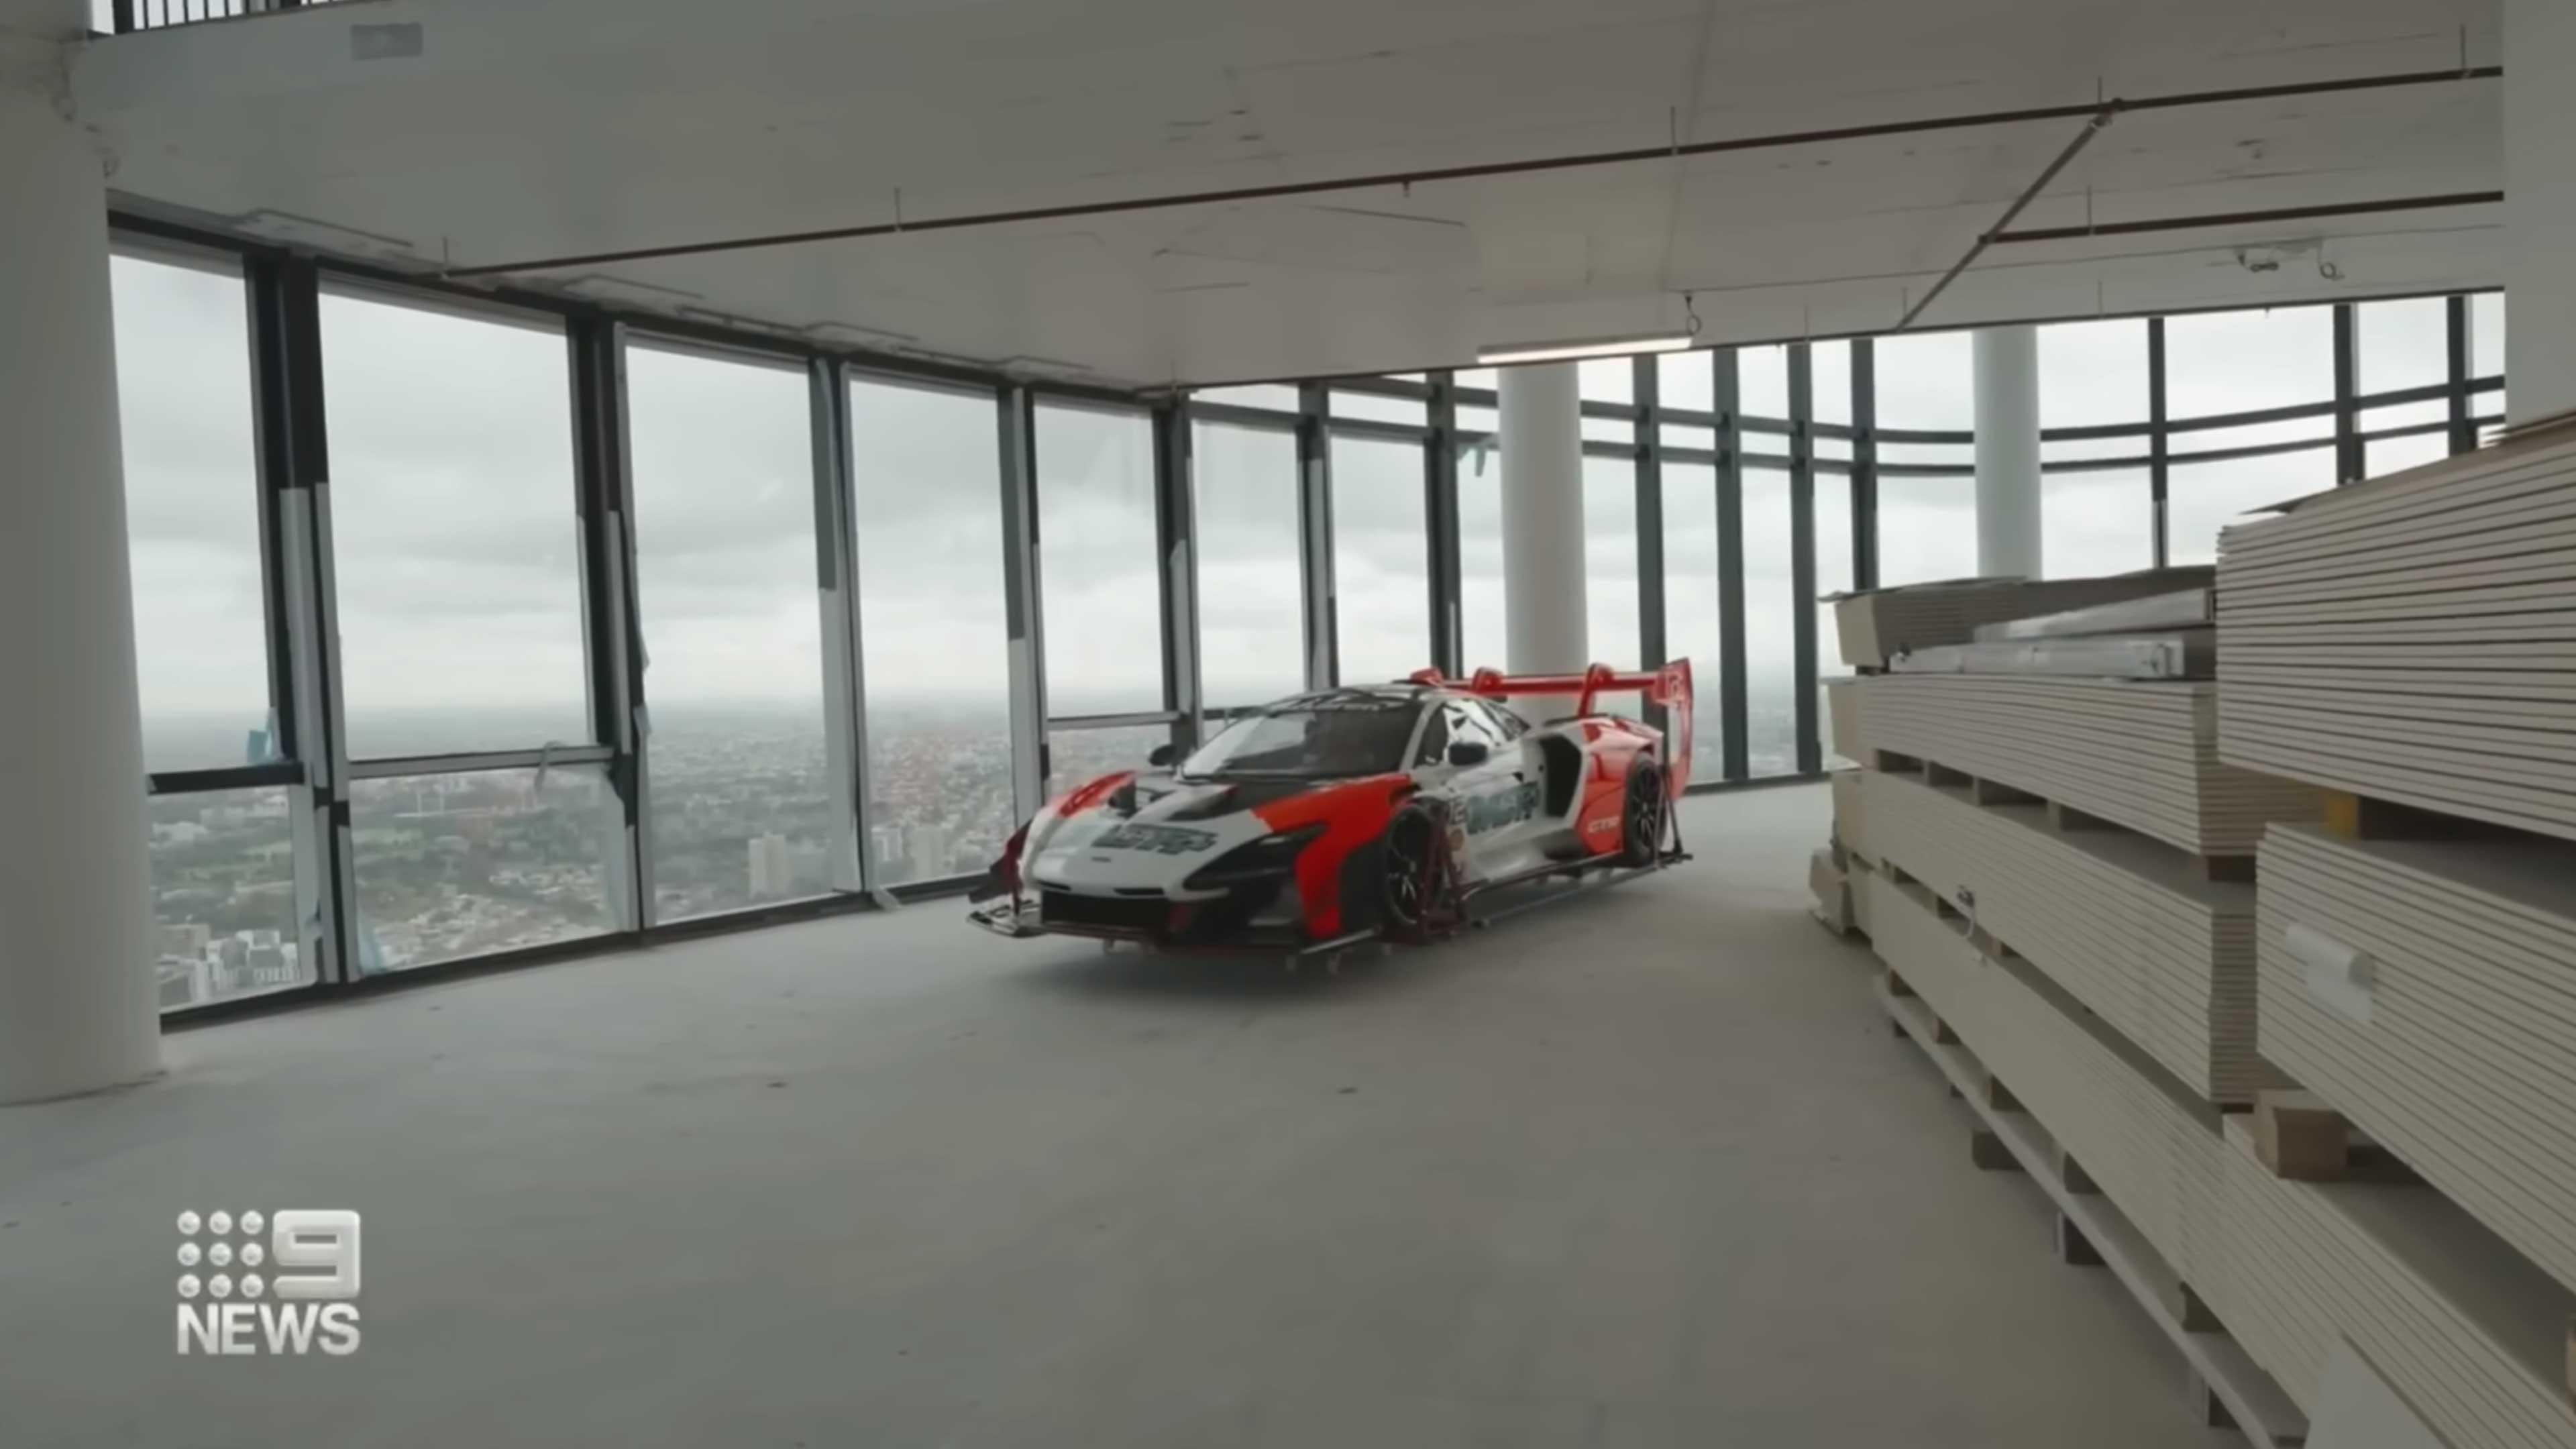 McLaren Senna GTR Marlboro Livery in penthouse op 200 meter hoogte